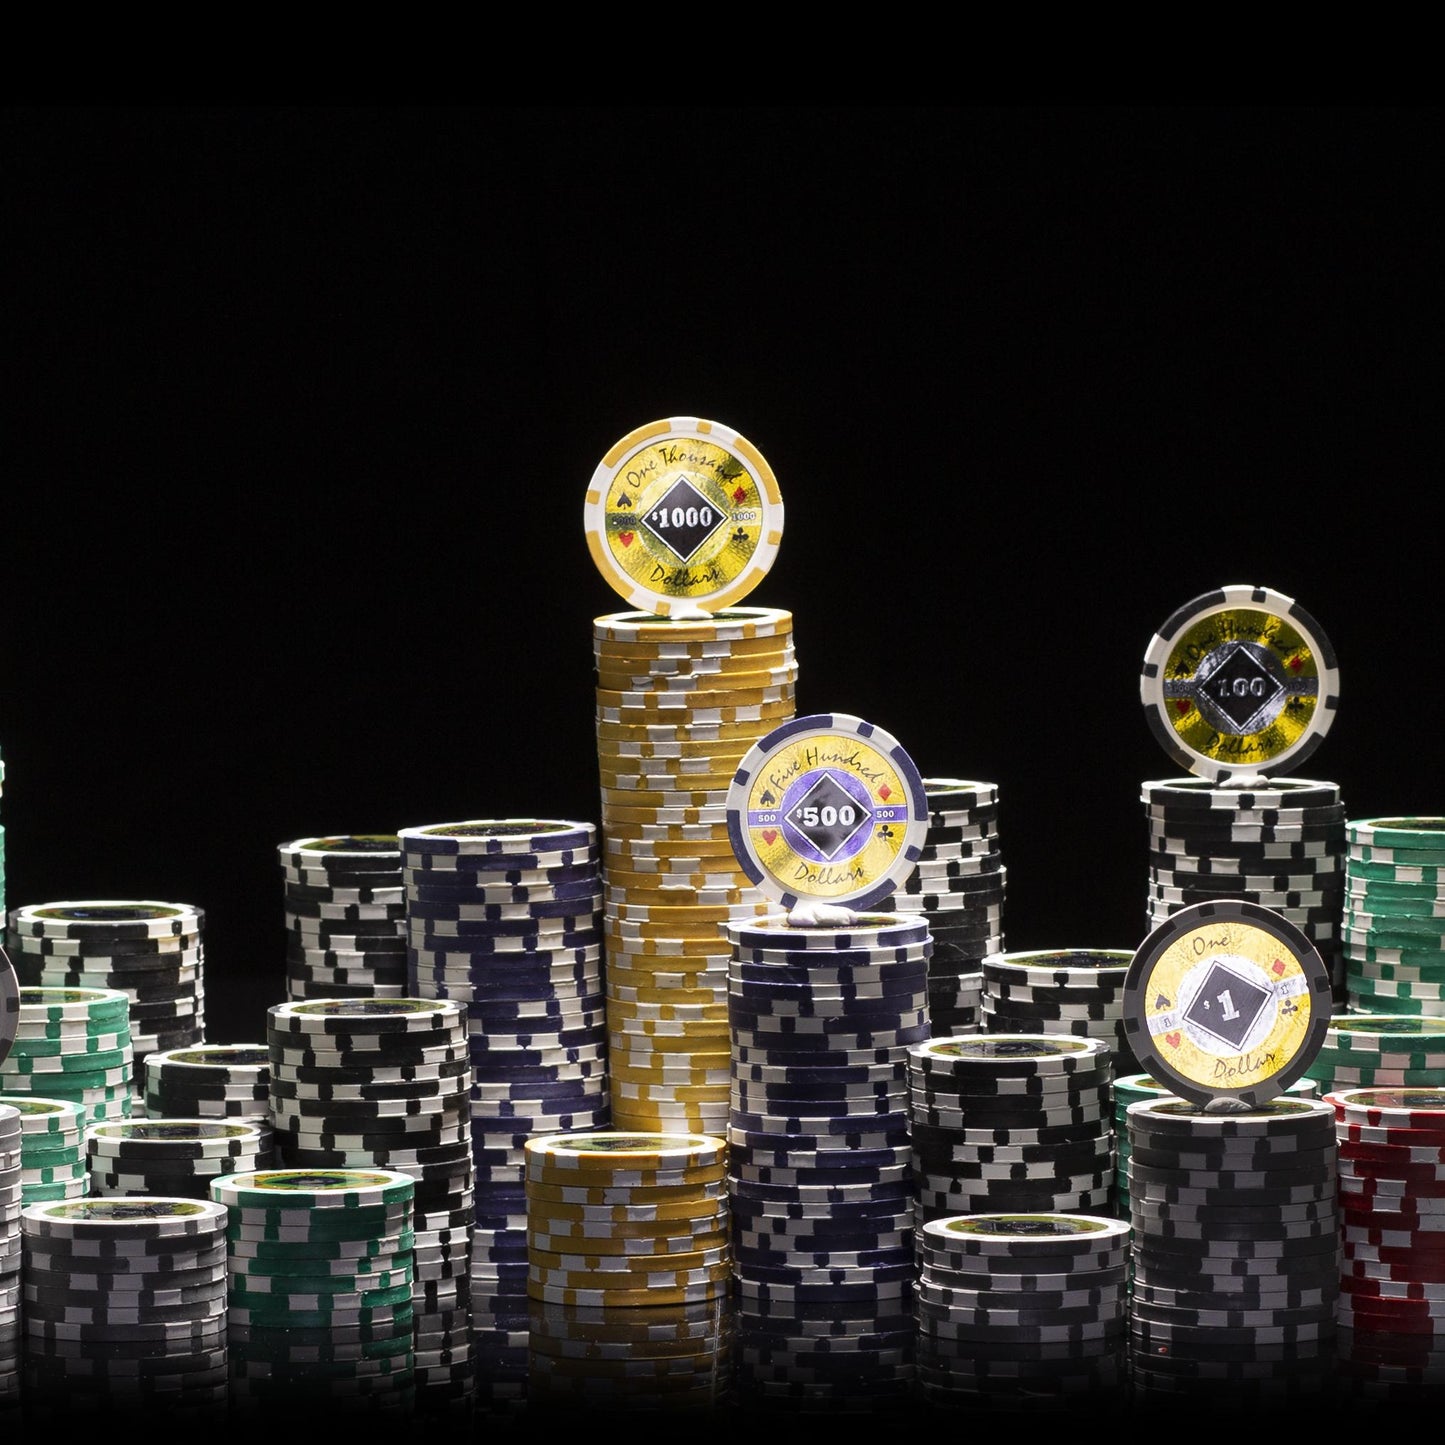 300 Black Diamond Poker Chips with Aluminum Case